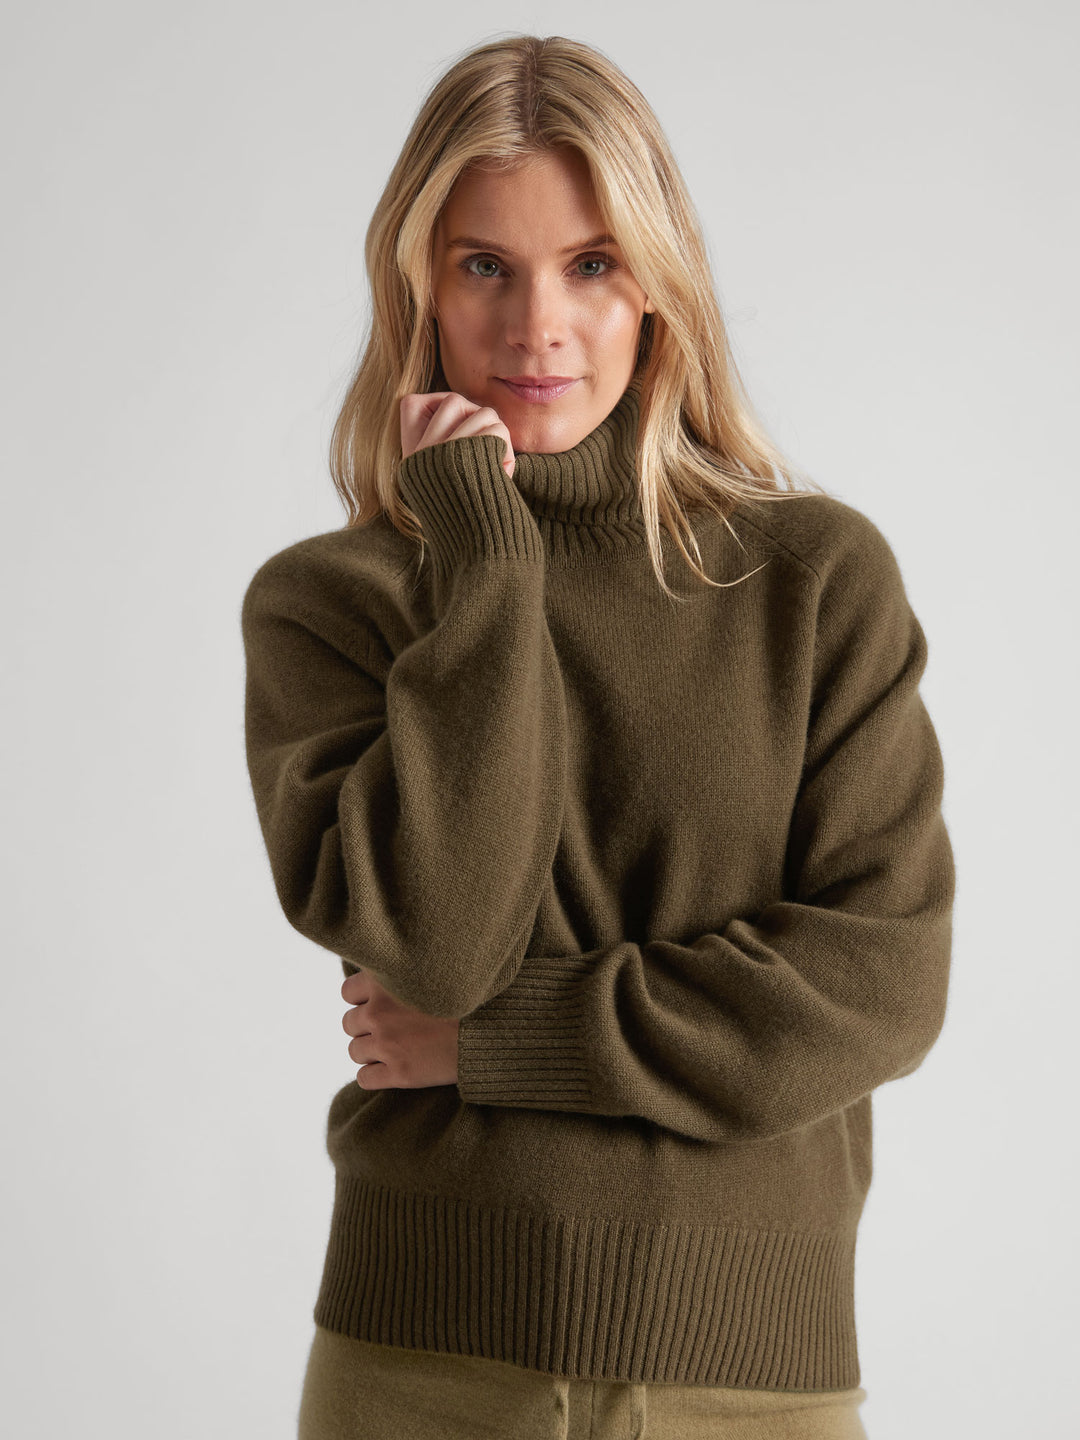 Turtle neck cashmere sweater "Milano" in 100% pure cashmere. Scandinavian design by Kashmina. Color: Hunter.